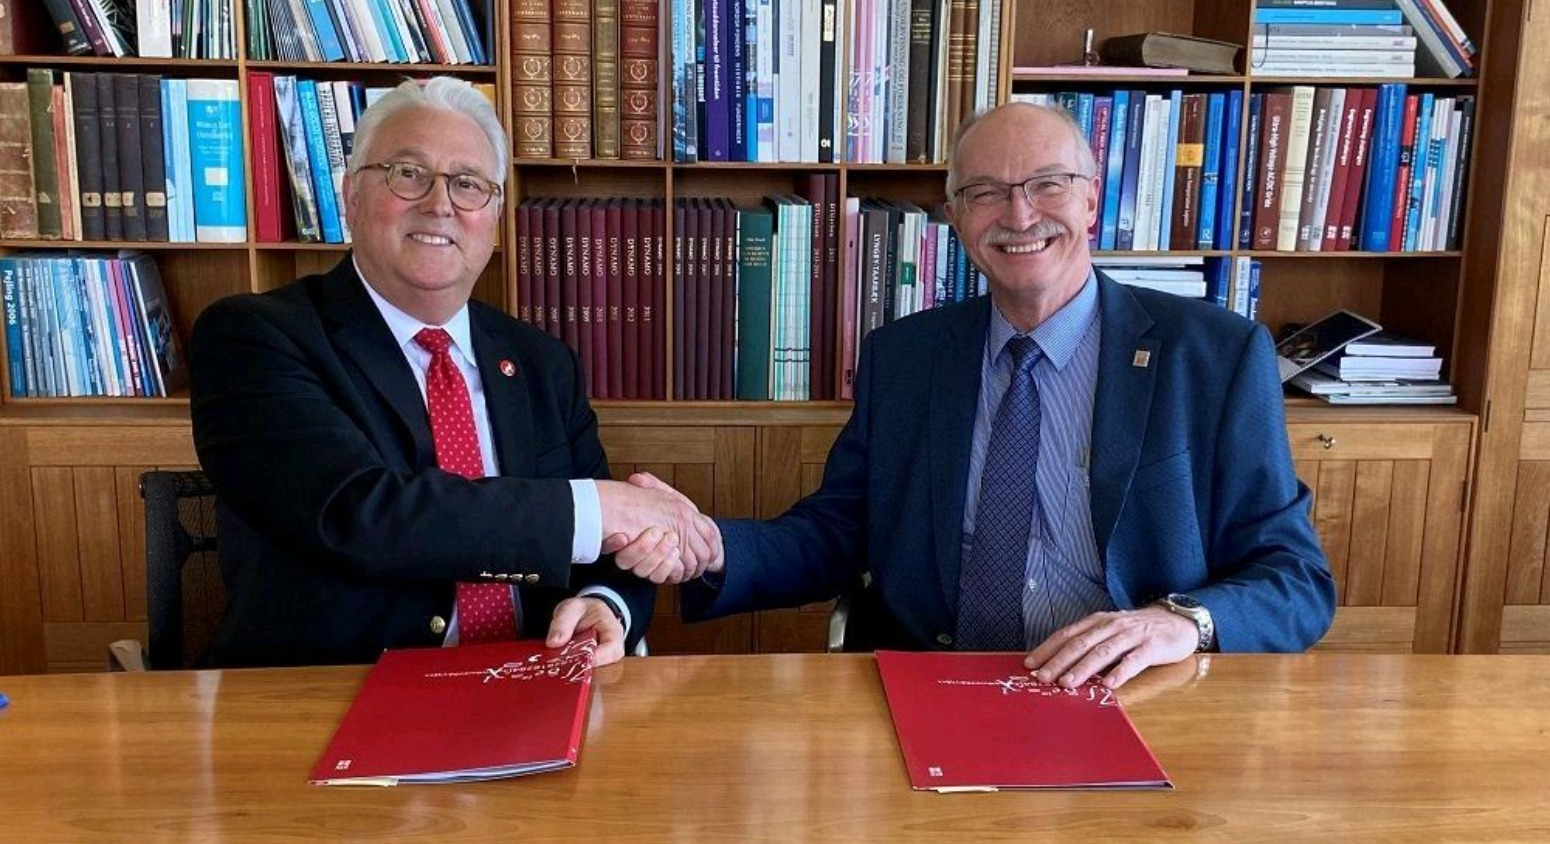 Chancellor Woodson (left) and DTU President Anders Bjarklev (right) shaking hands after signing strategic partnership agreement